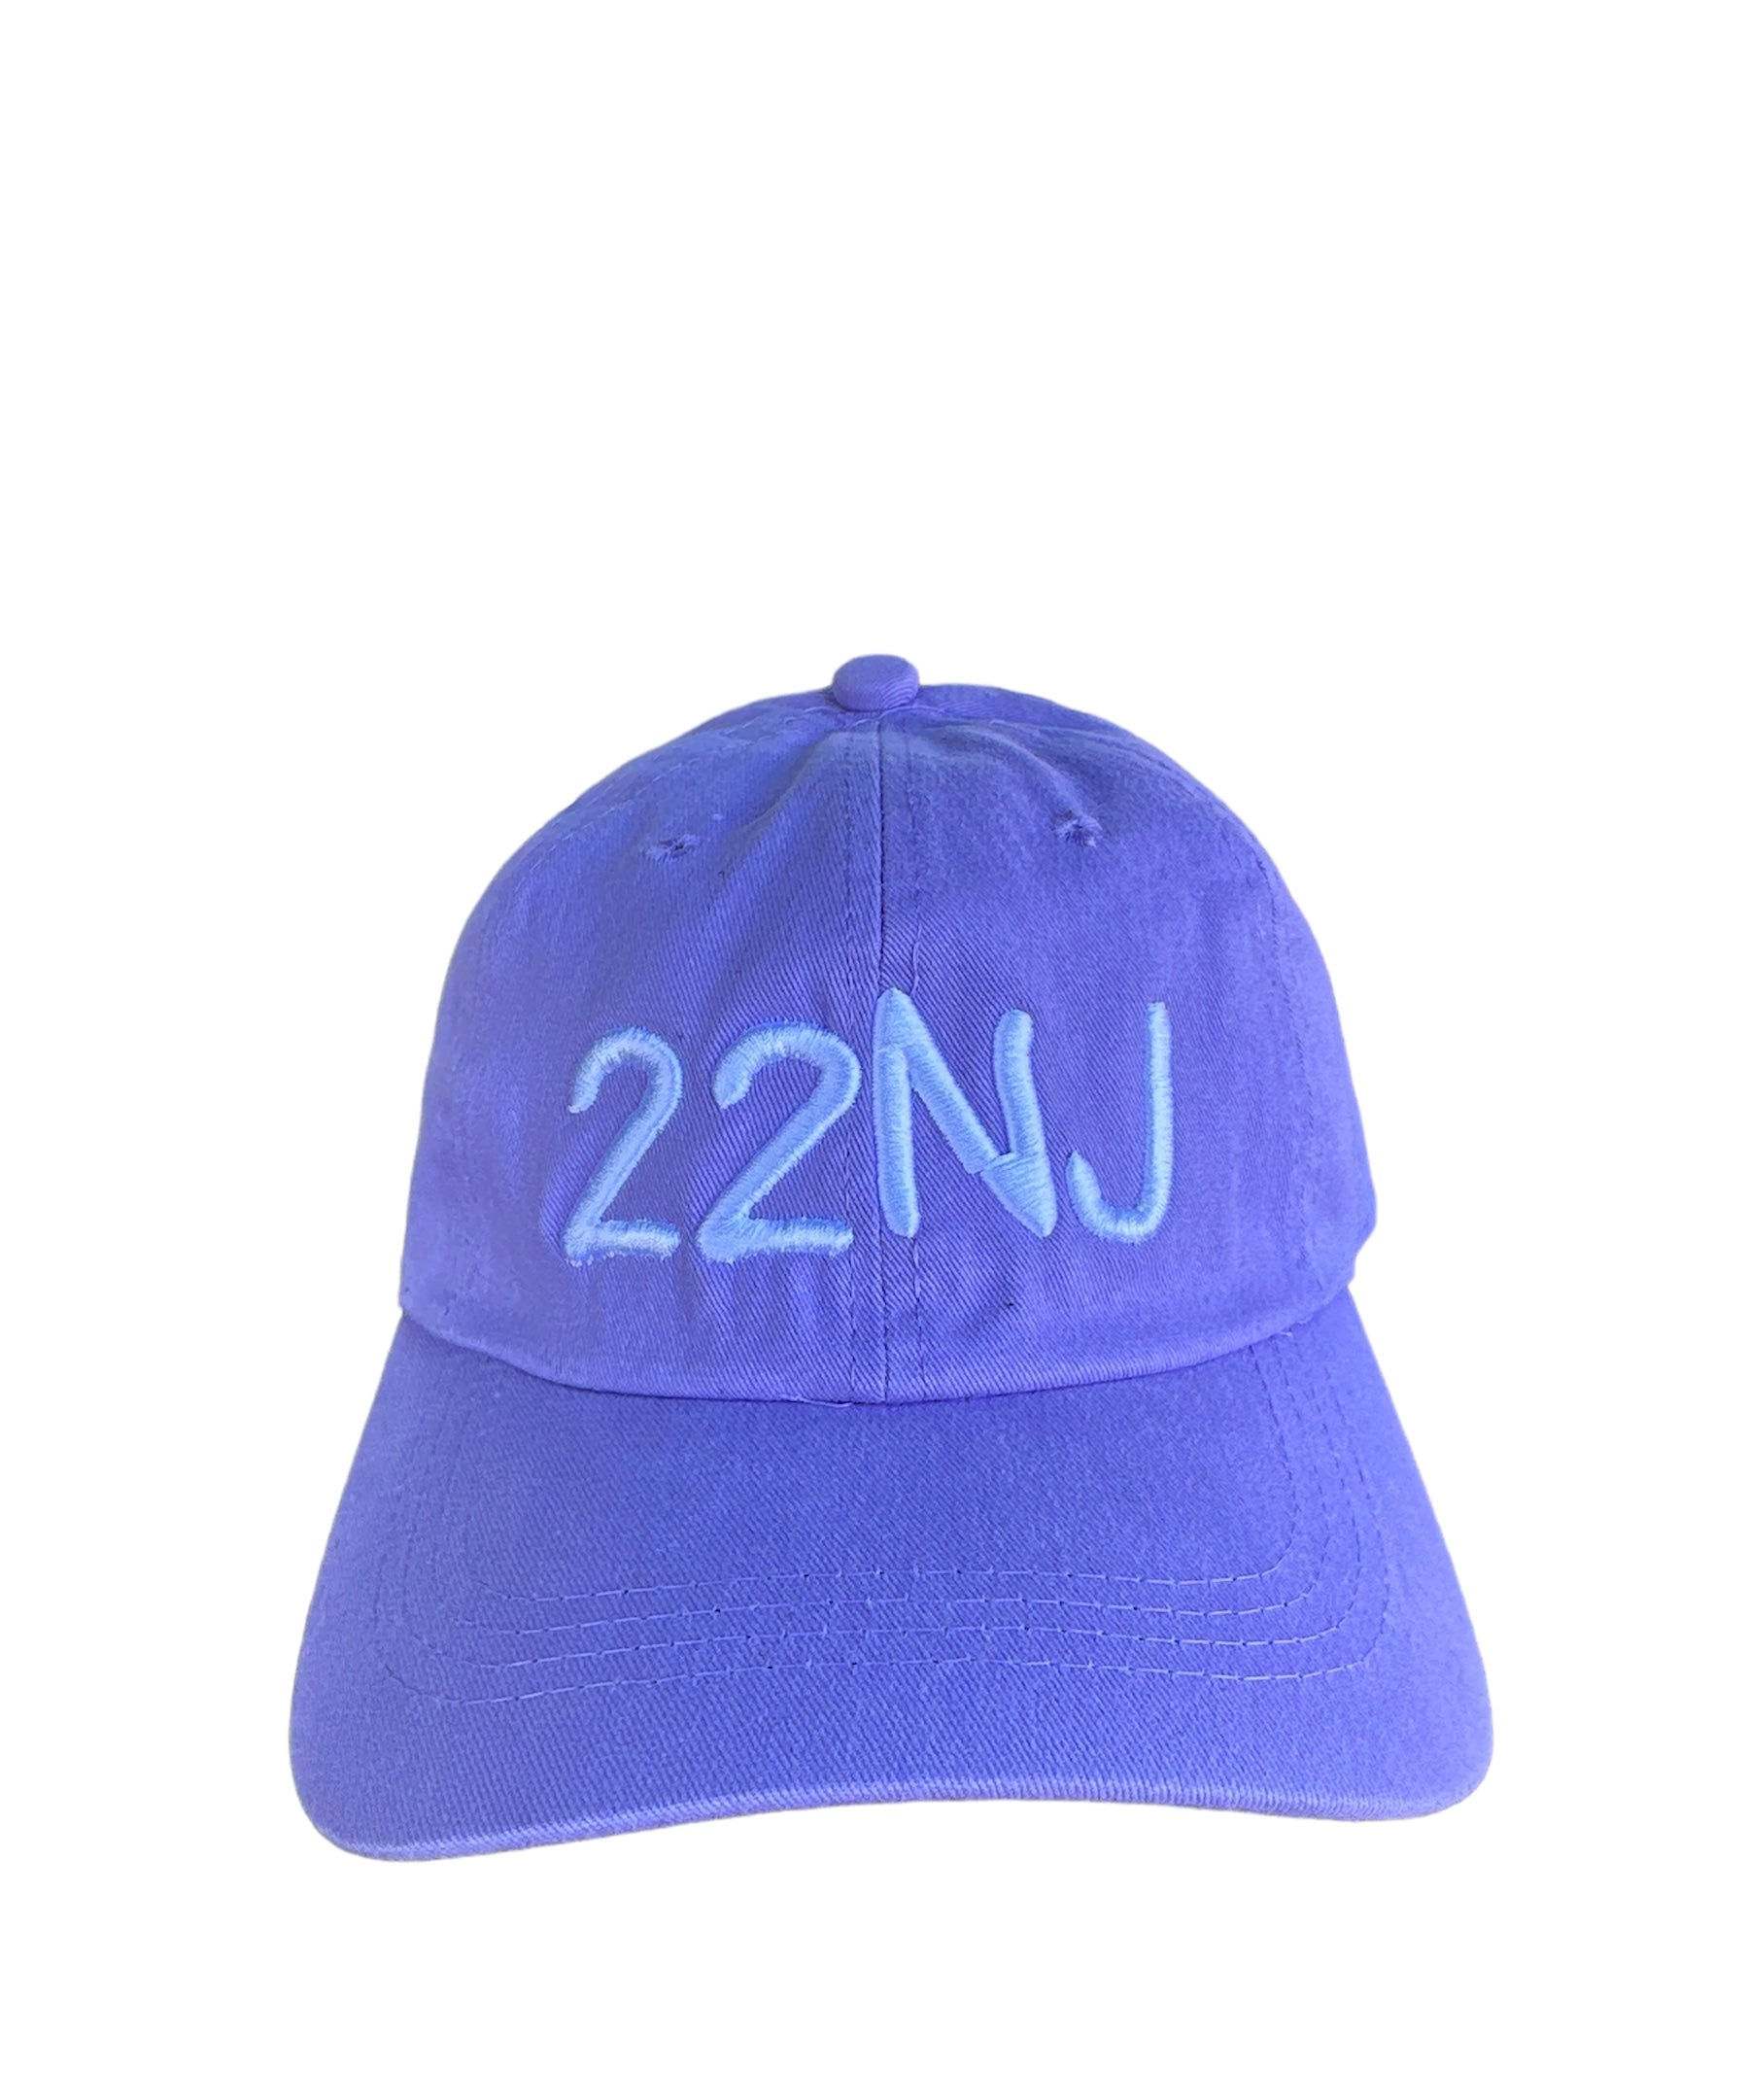 22NJ Washed Lilac Cap